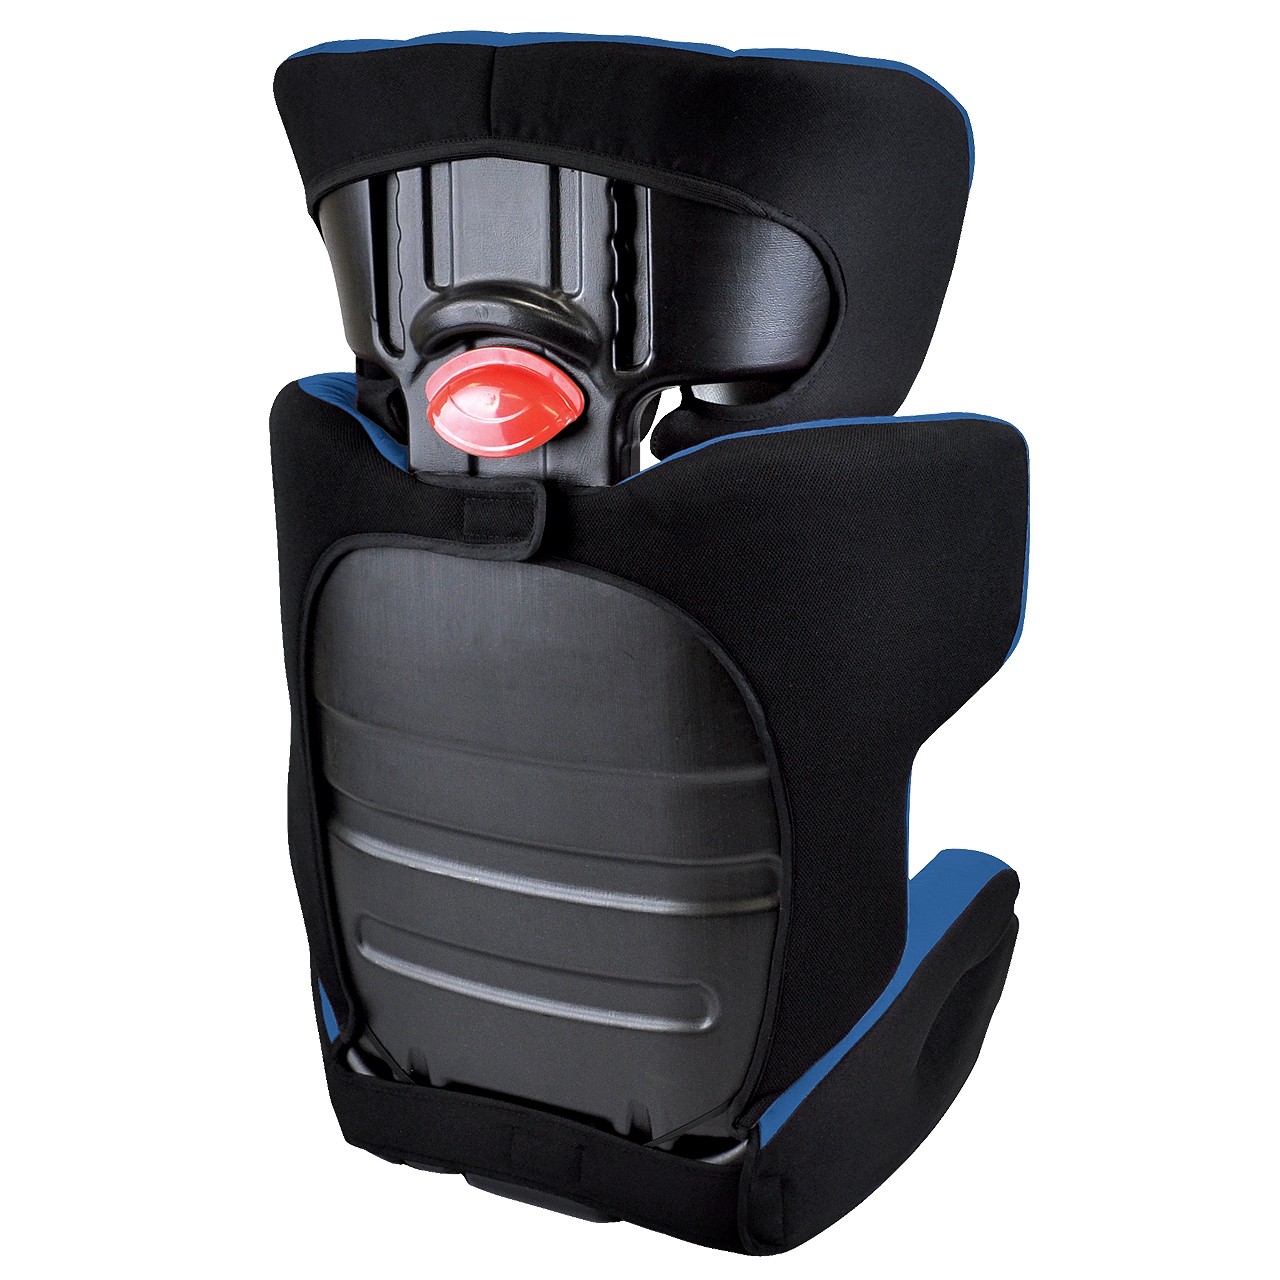 Dreamtime Elite Comfort Booster Car Seat - Rich Royal